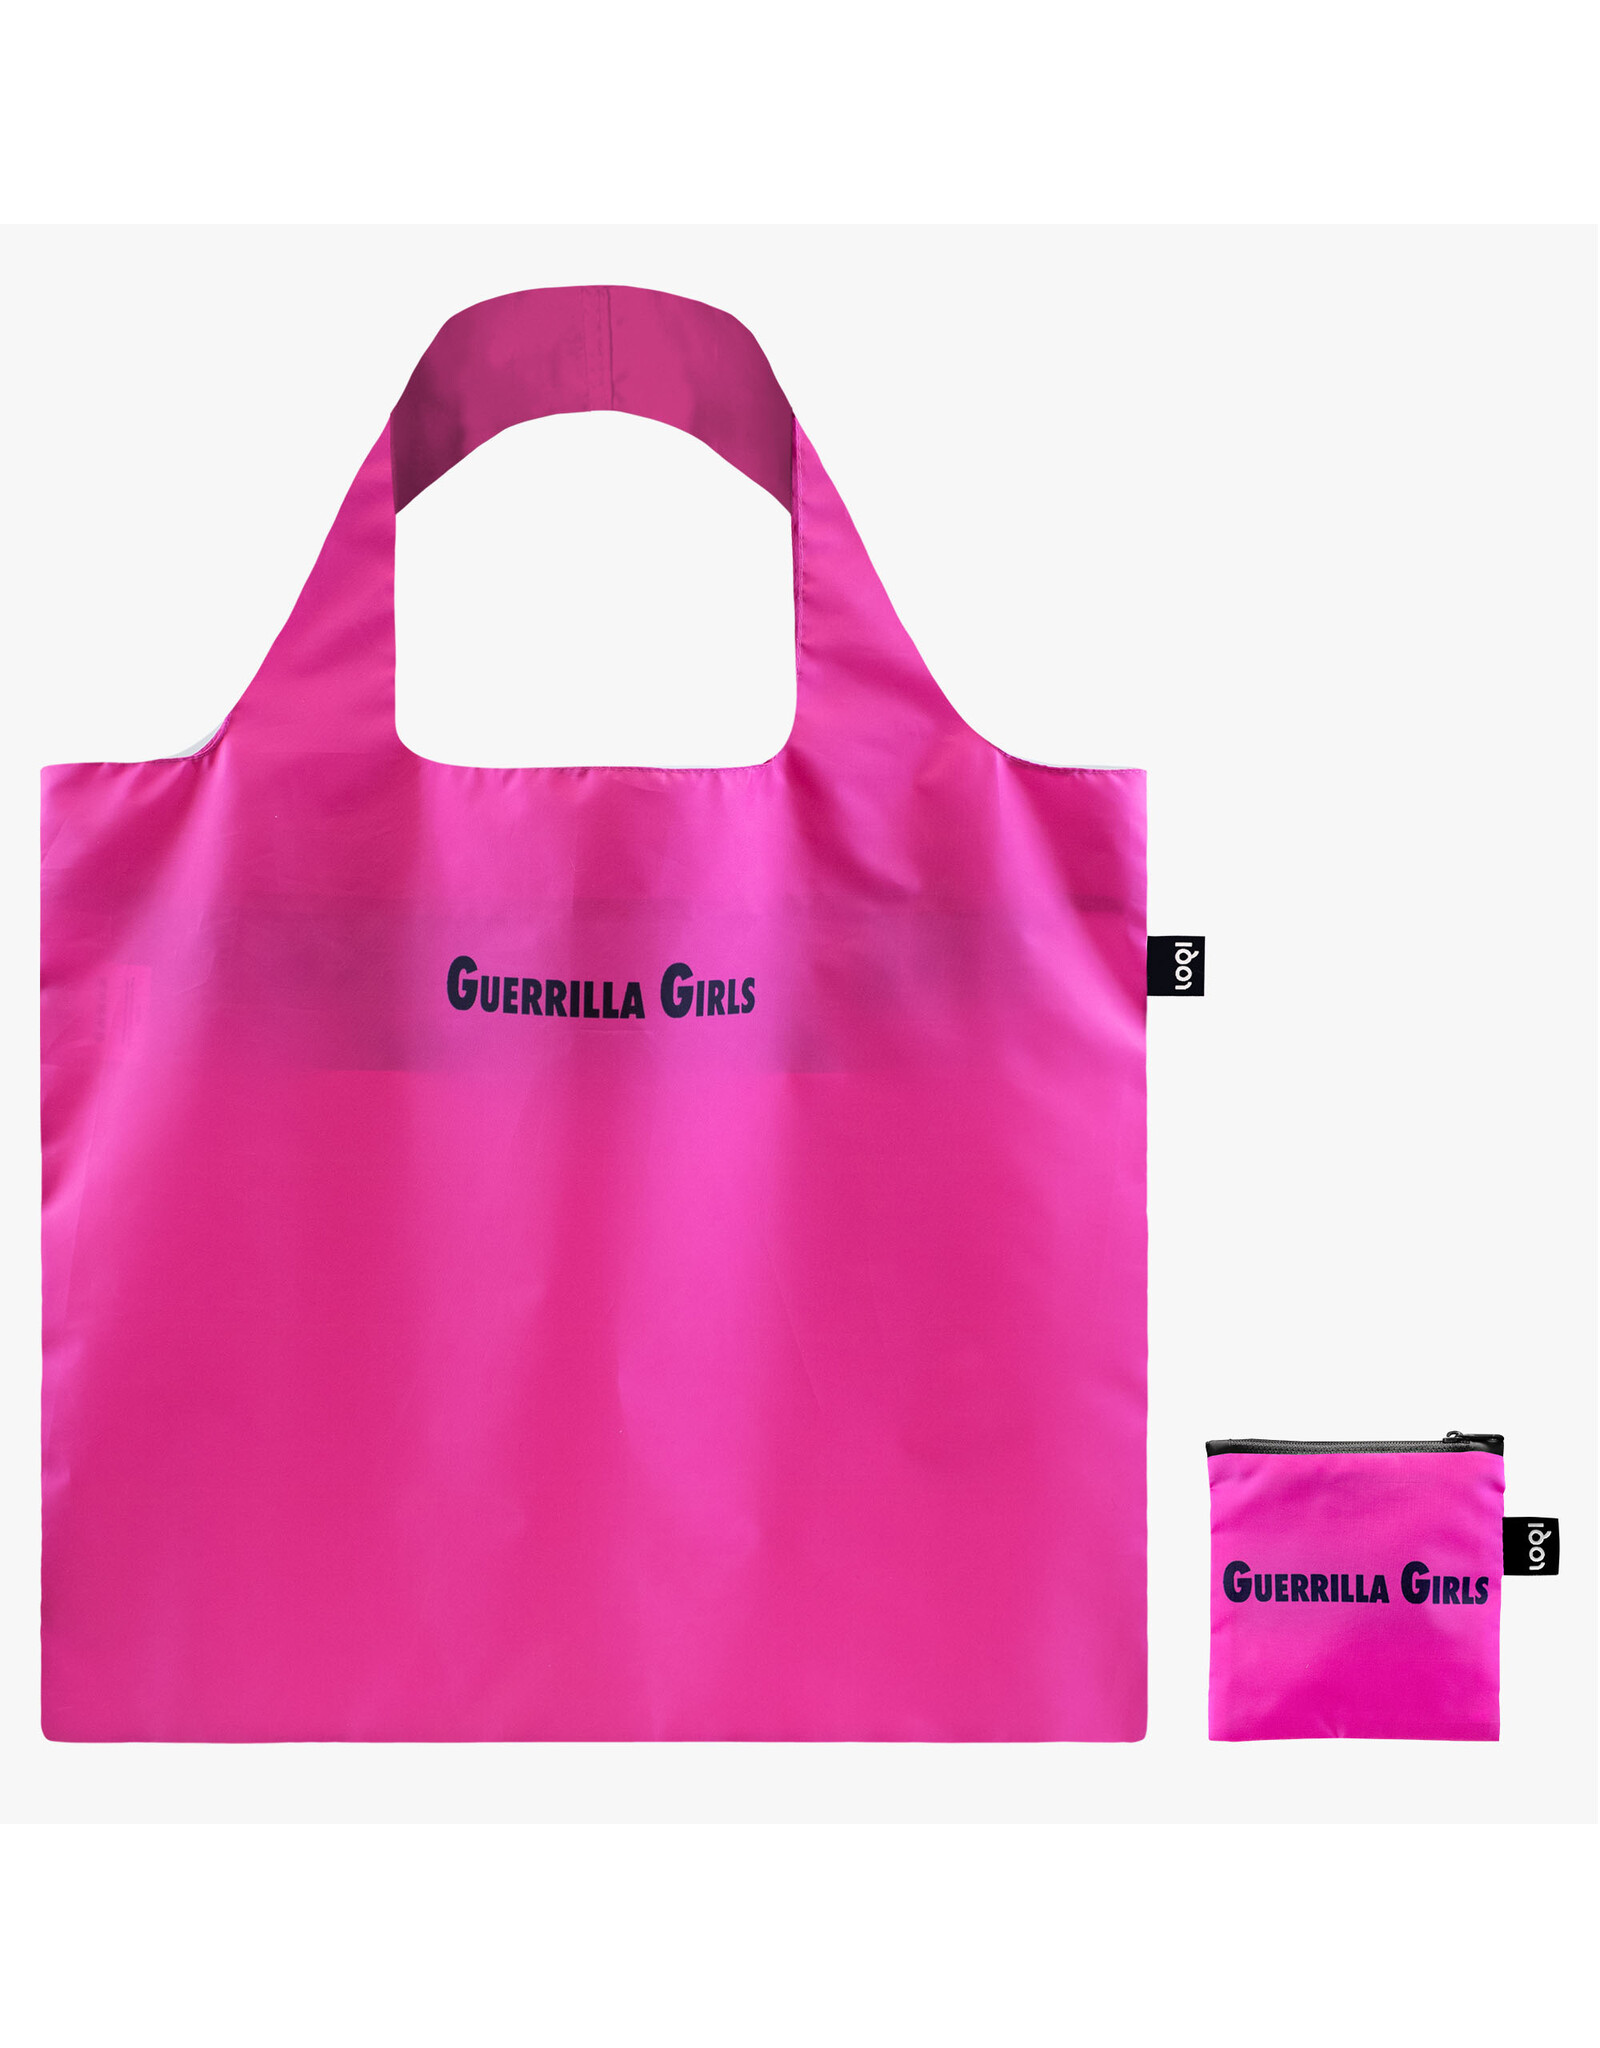 Guerrilla Girls x Being A Woman Artist LOQI Recycled Bag